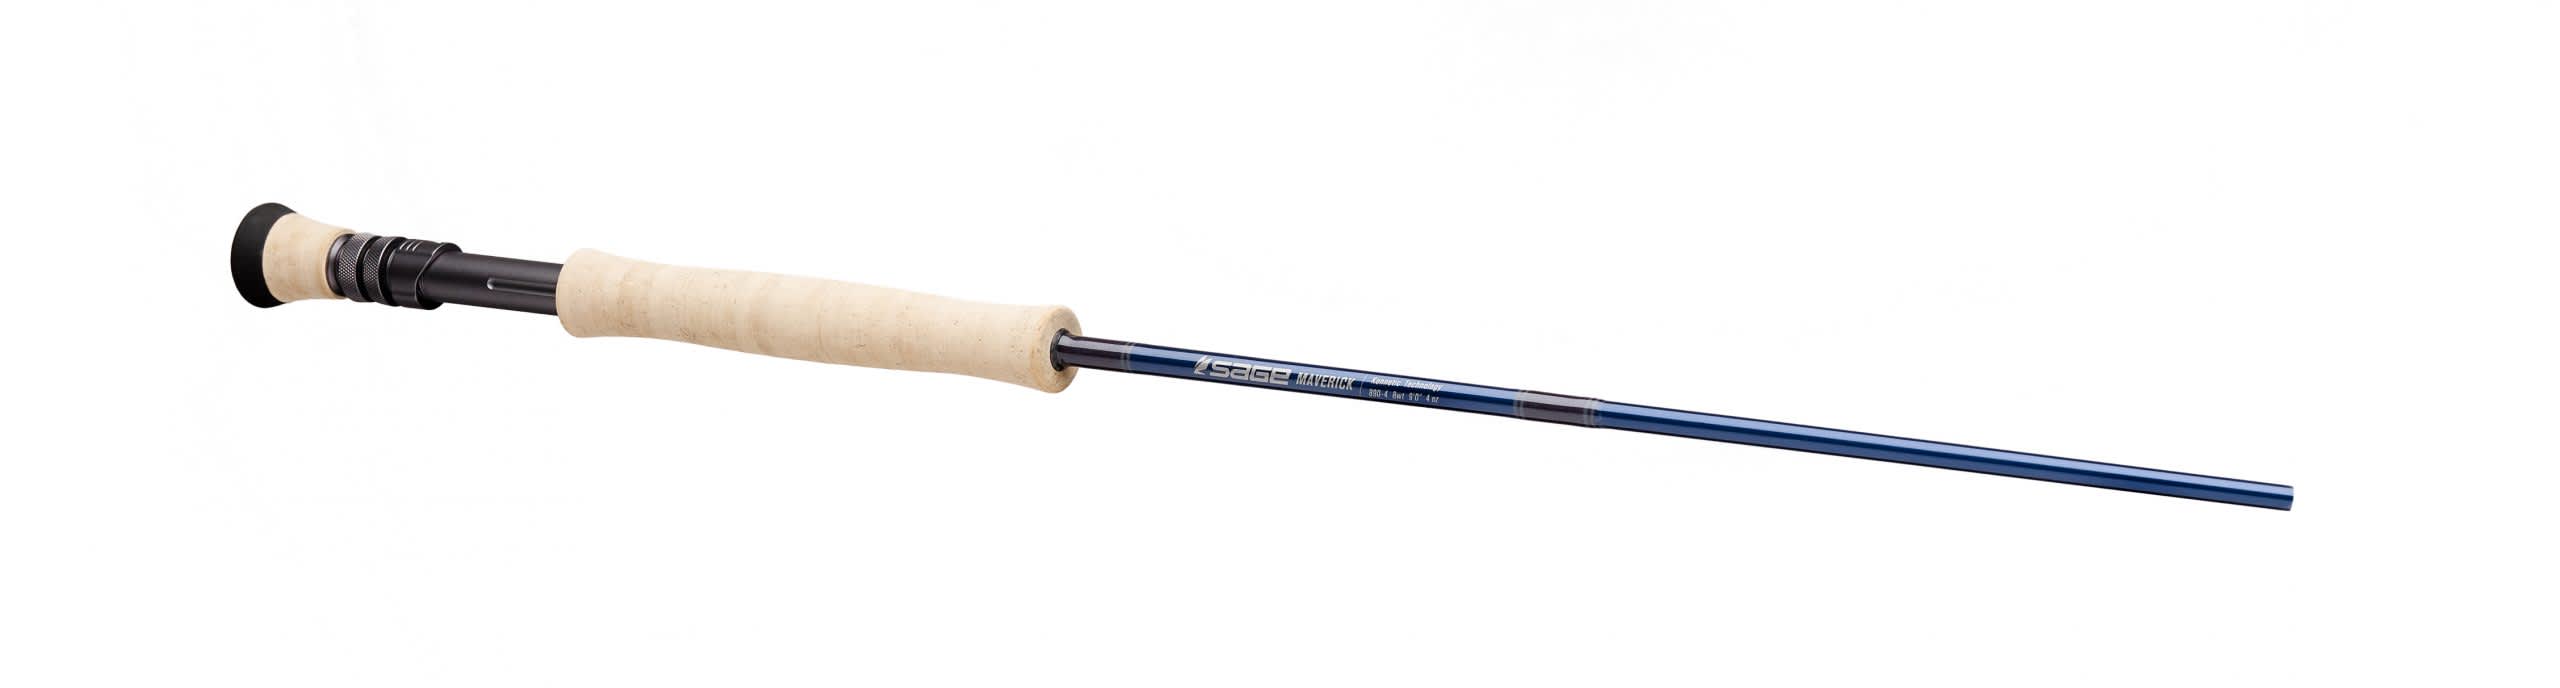 Sage Maverick Fly Fishing Rod for Sale | Slide Inn